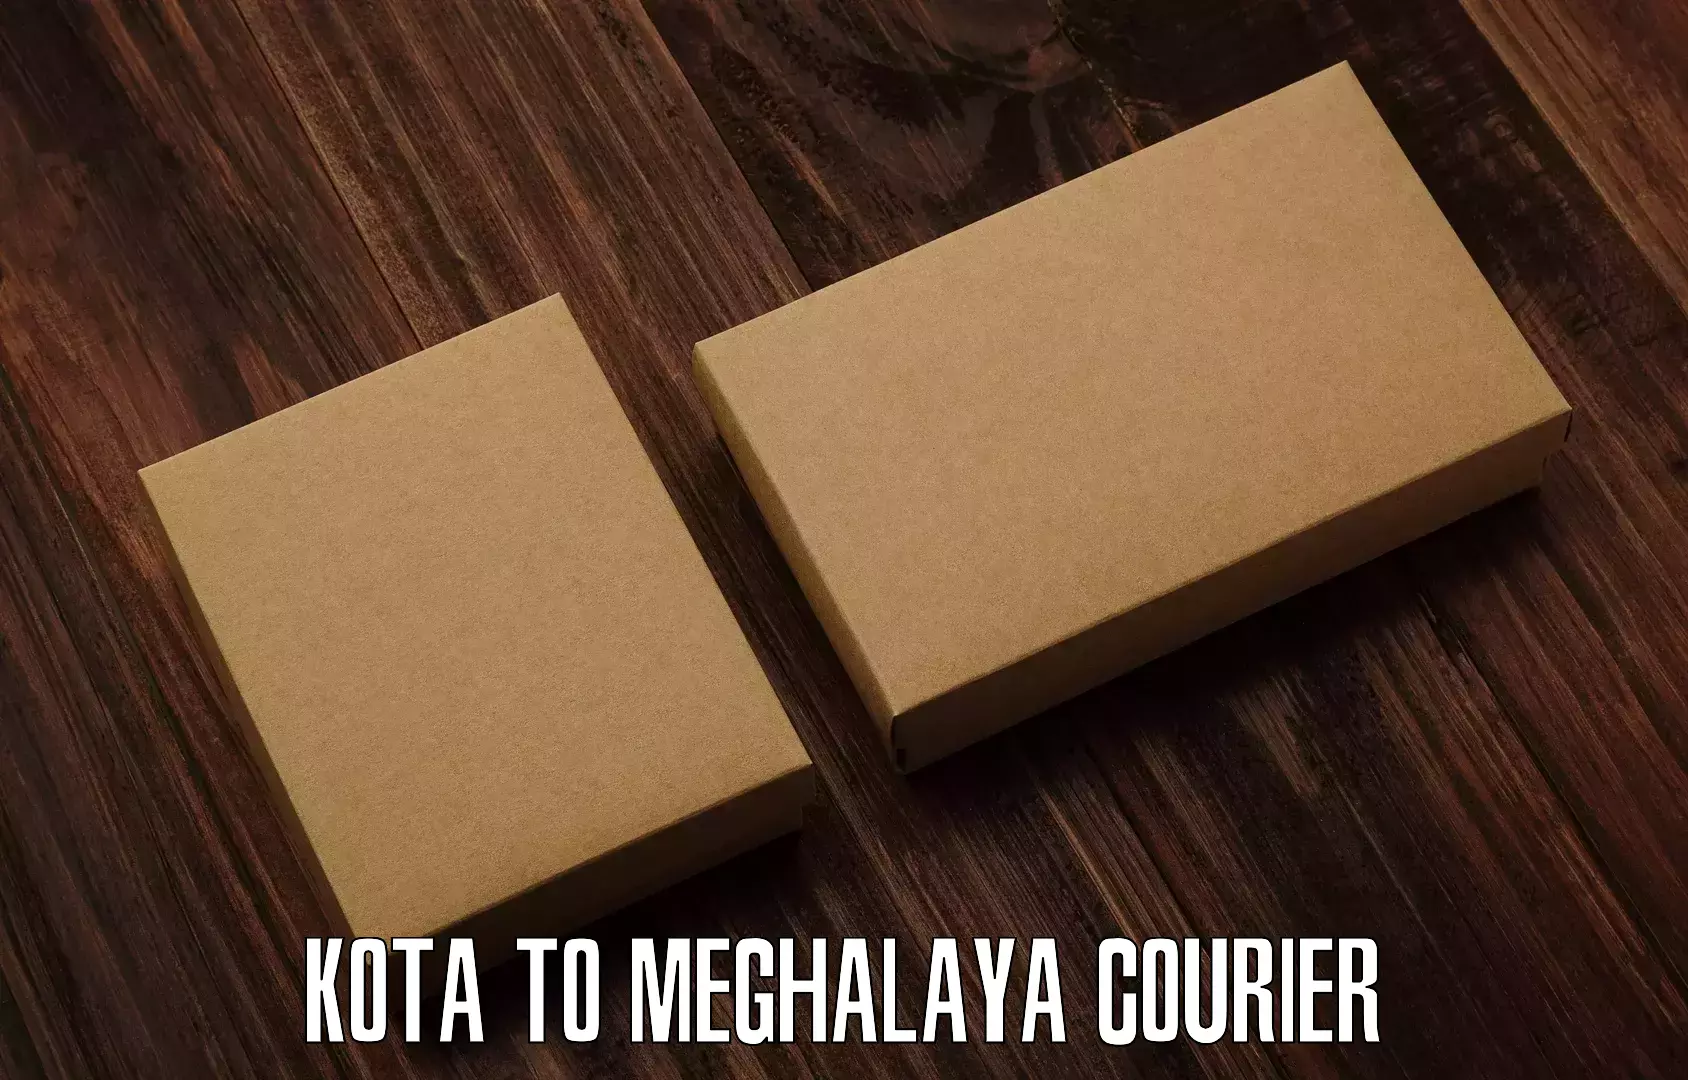 Advanced courier platforms Kota to Meghalaya